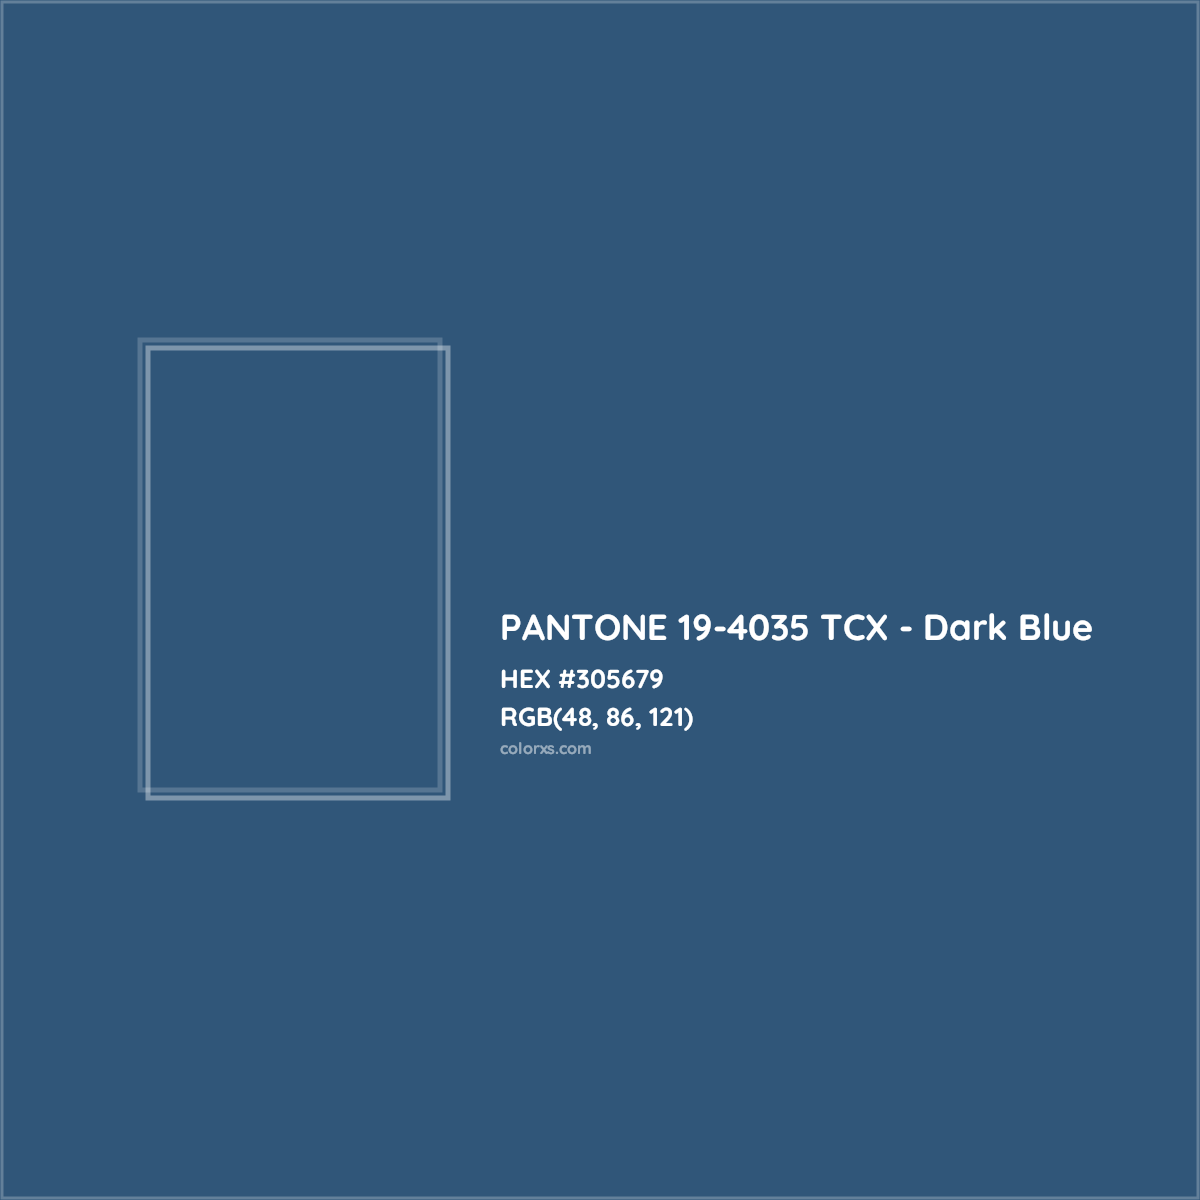 HEX #305679 PANTONE 19-4035 TCX - Dark Blue CMS Pantone TCX - Color Code